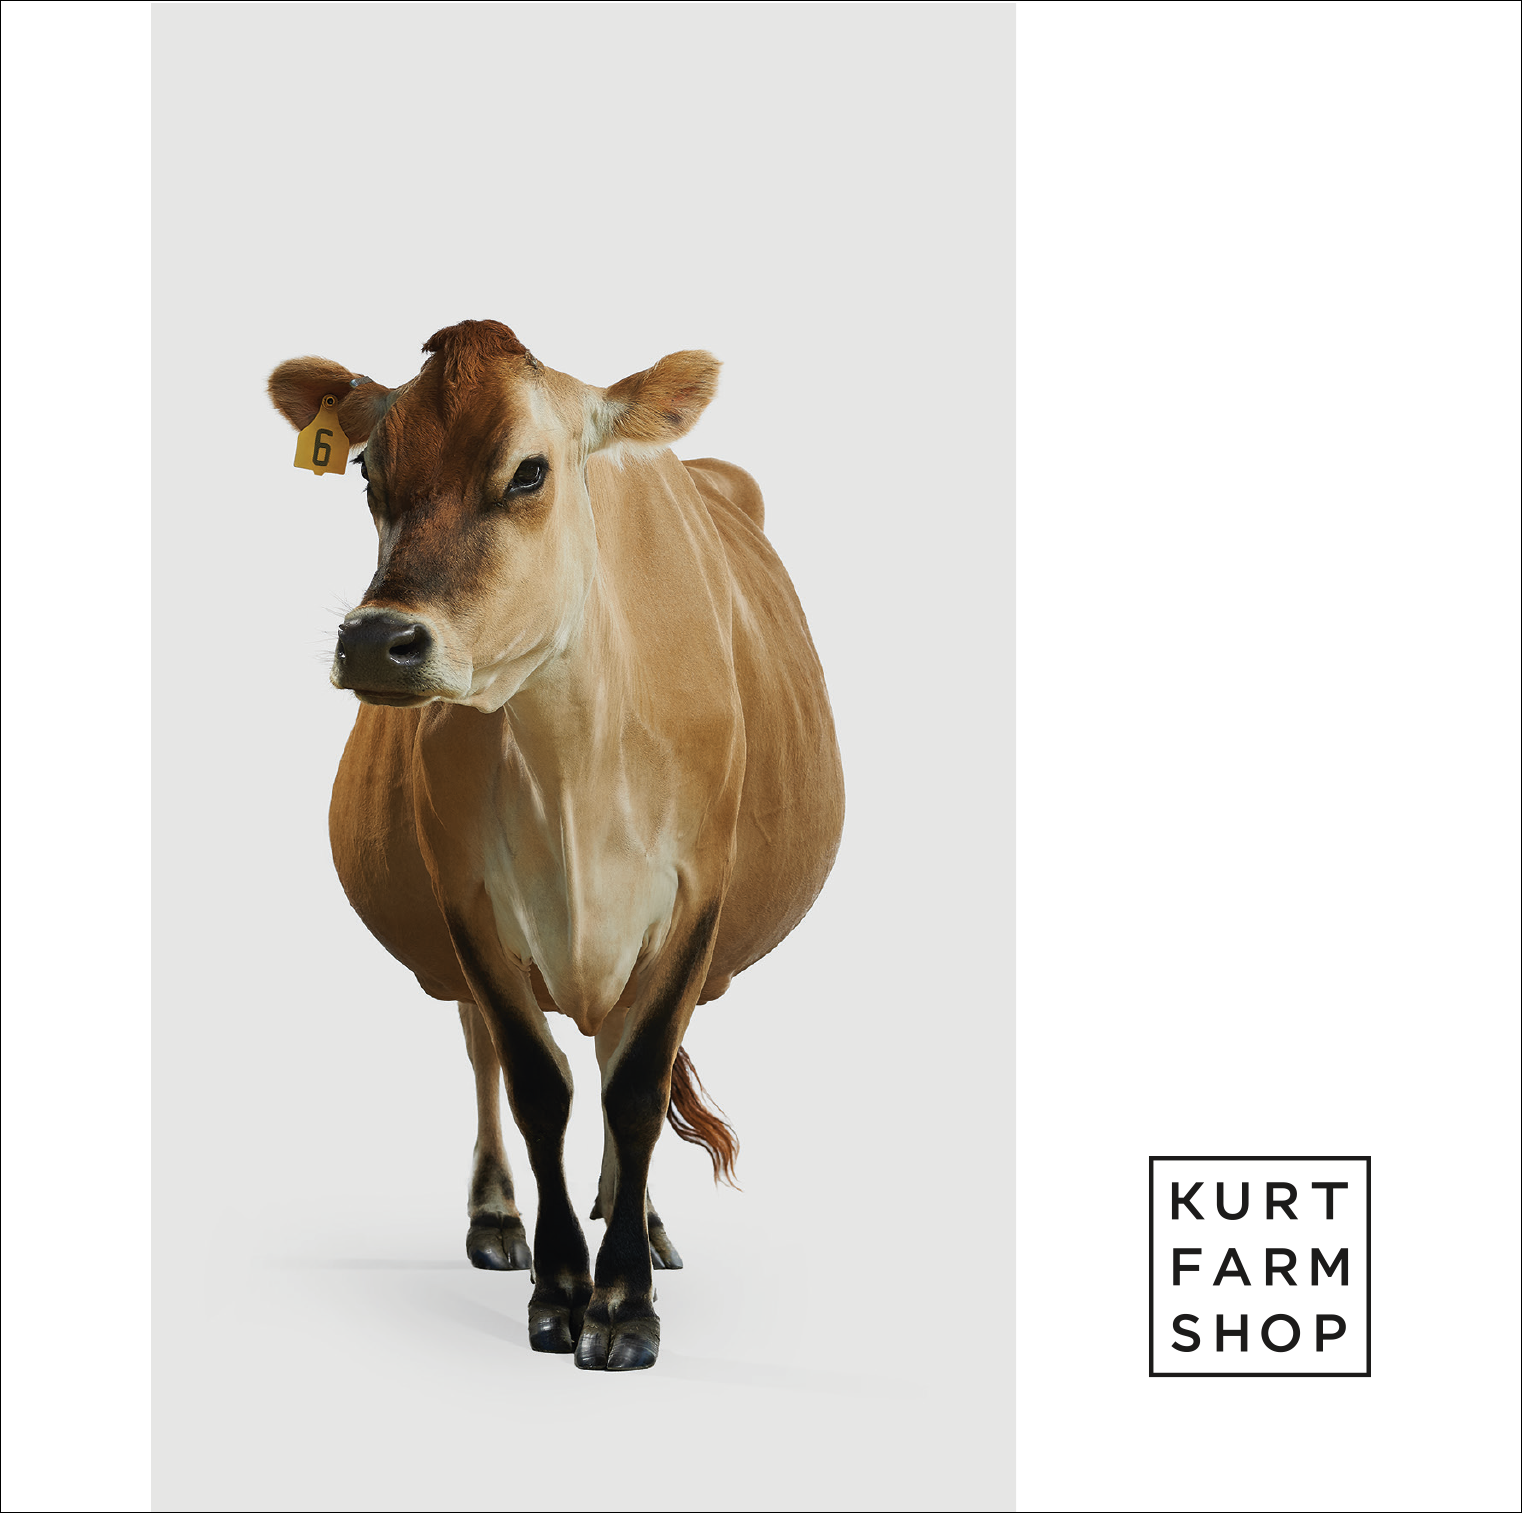 Kurt Farm Shop | Postcard